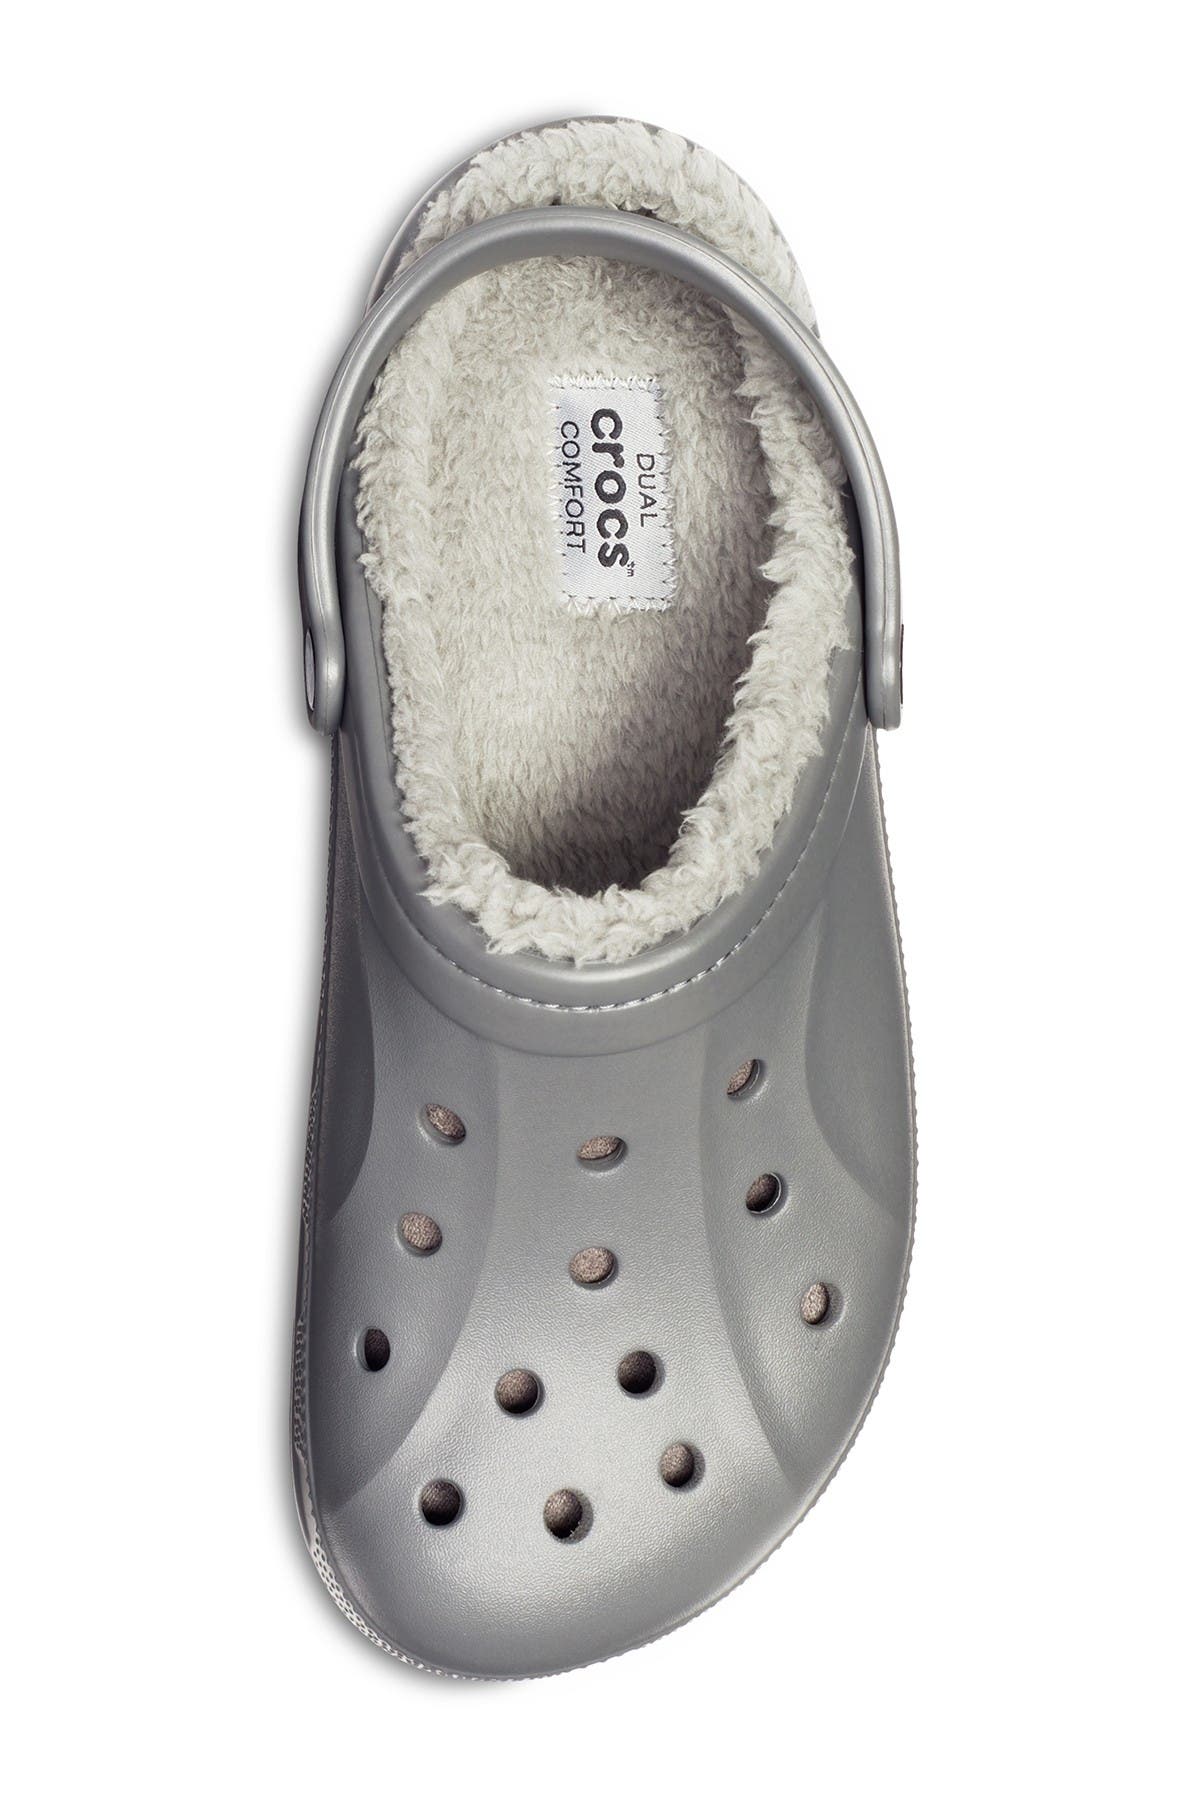 grey winter crocs